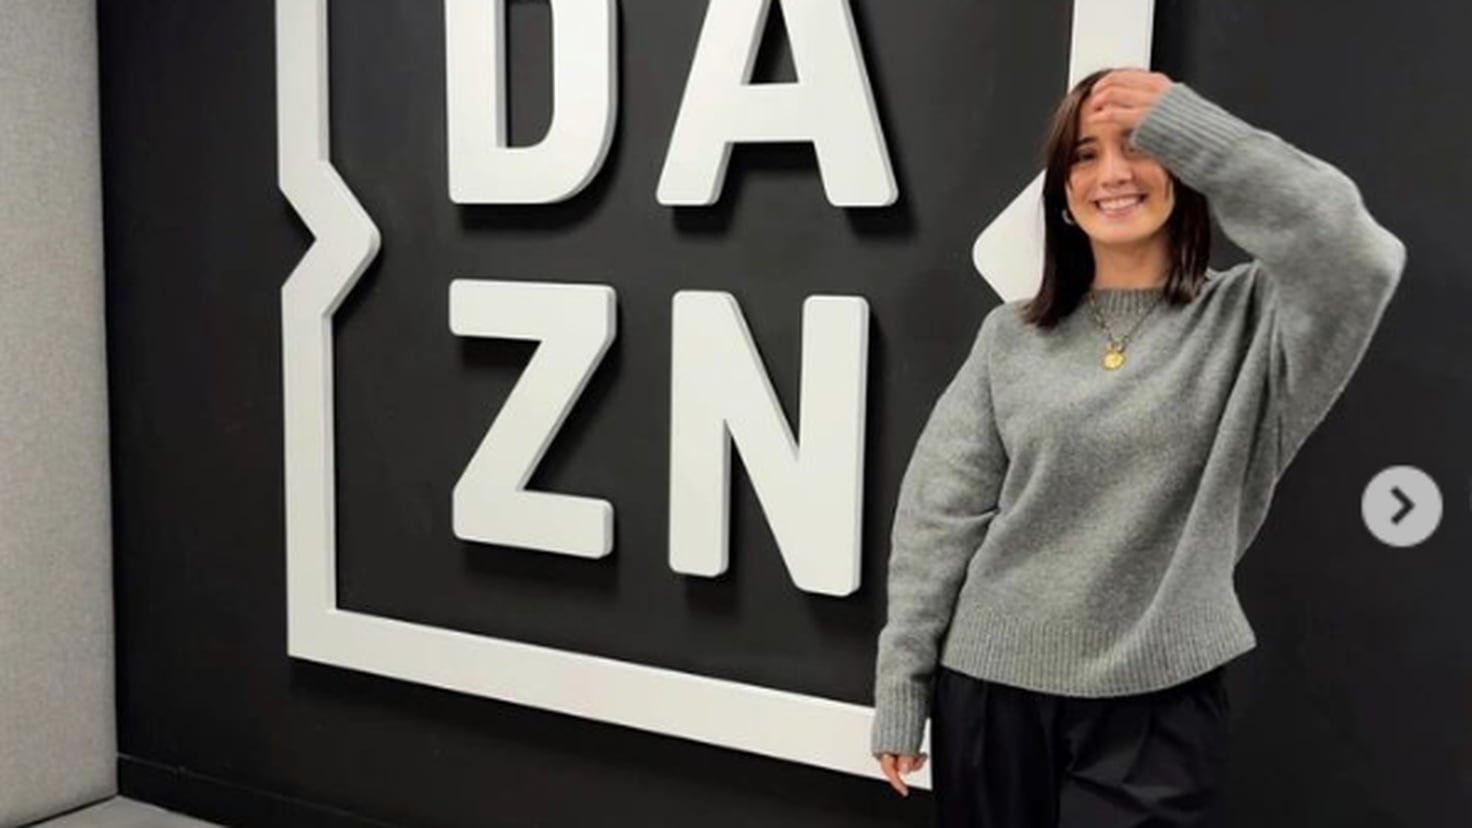 Antonio Lobato's daughter signs for DAZN for Formula 1
